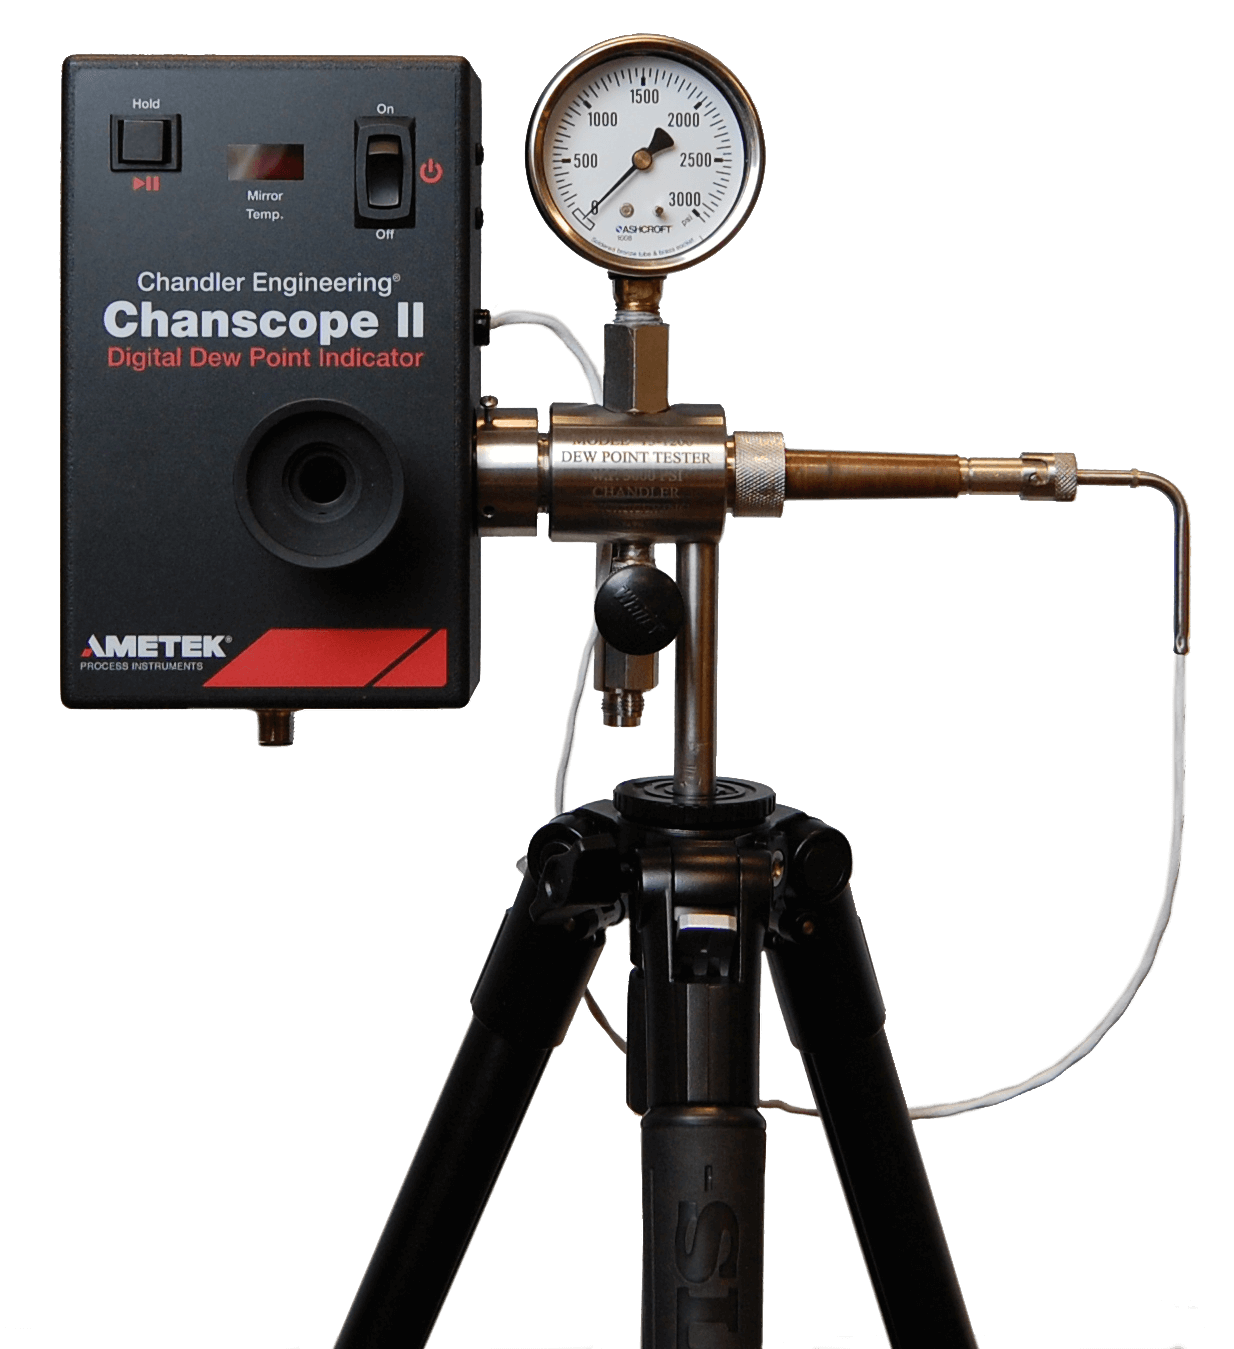 Chandler Engineering Chanscope II Dew Point Tester